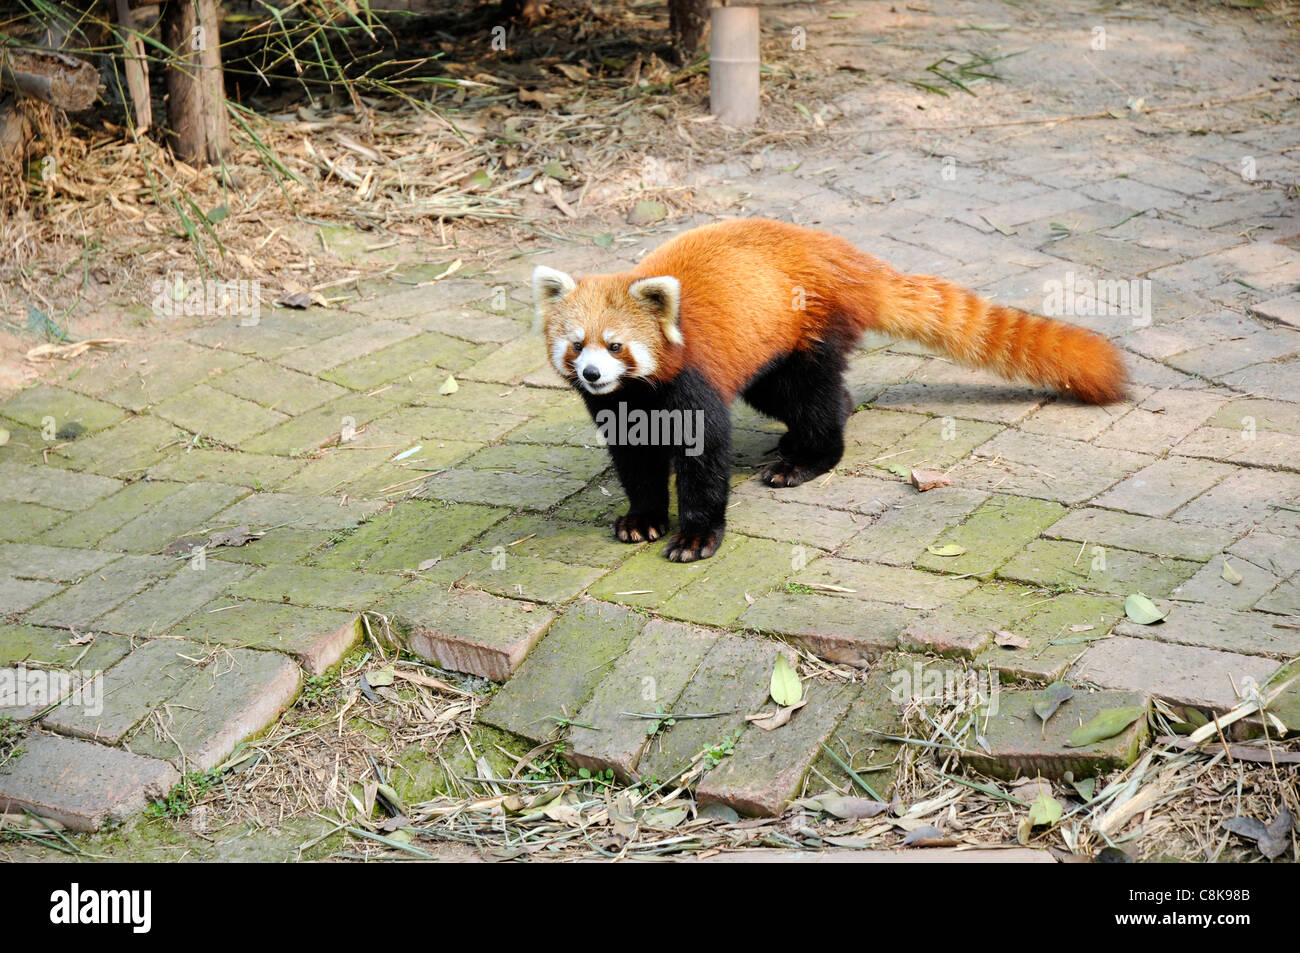 Red Panda (Ailurus fulgens or shining-cat), a small arboreal mammal native to eastern Himalayas and southwestern China. Stock Photo